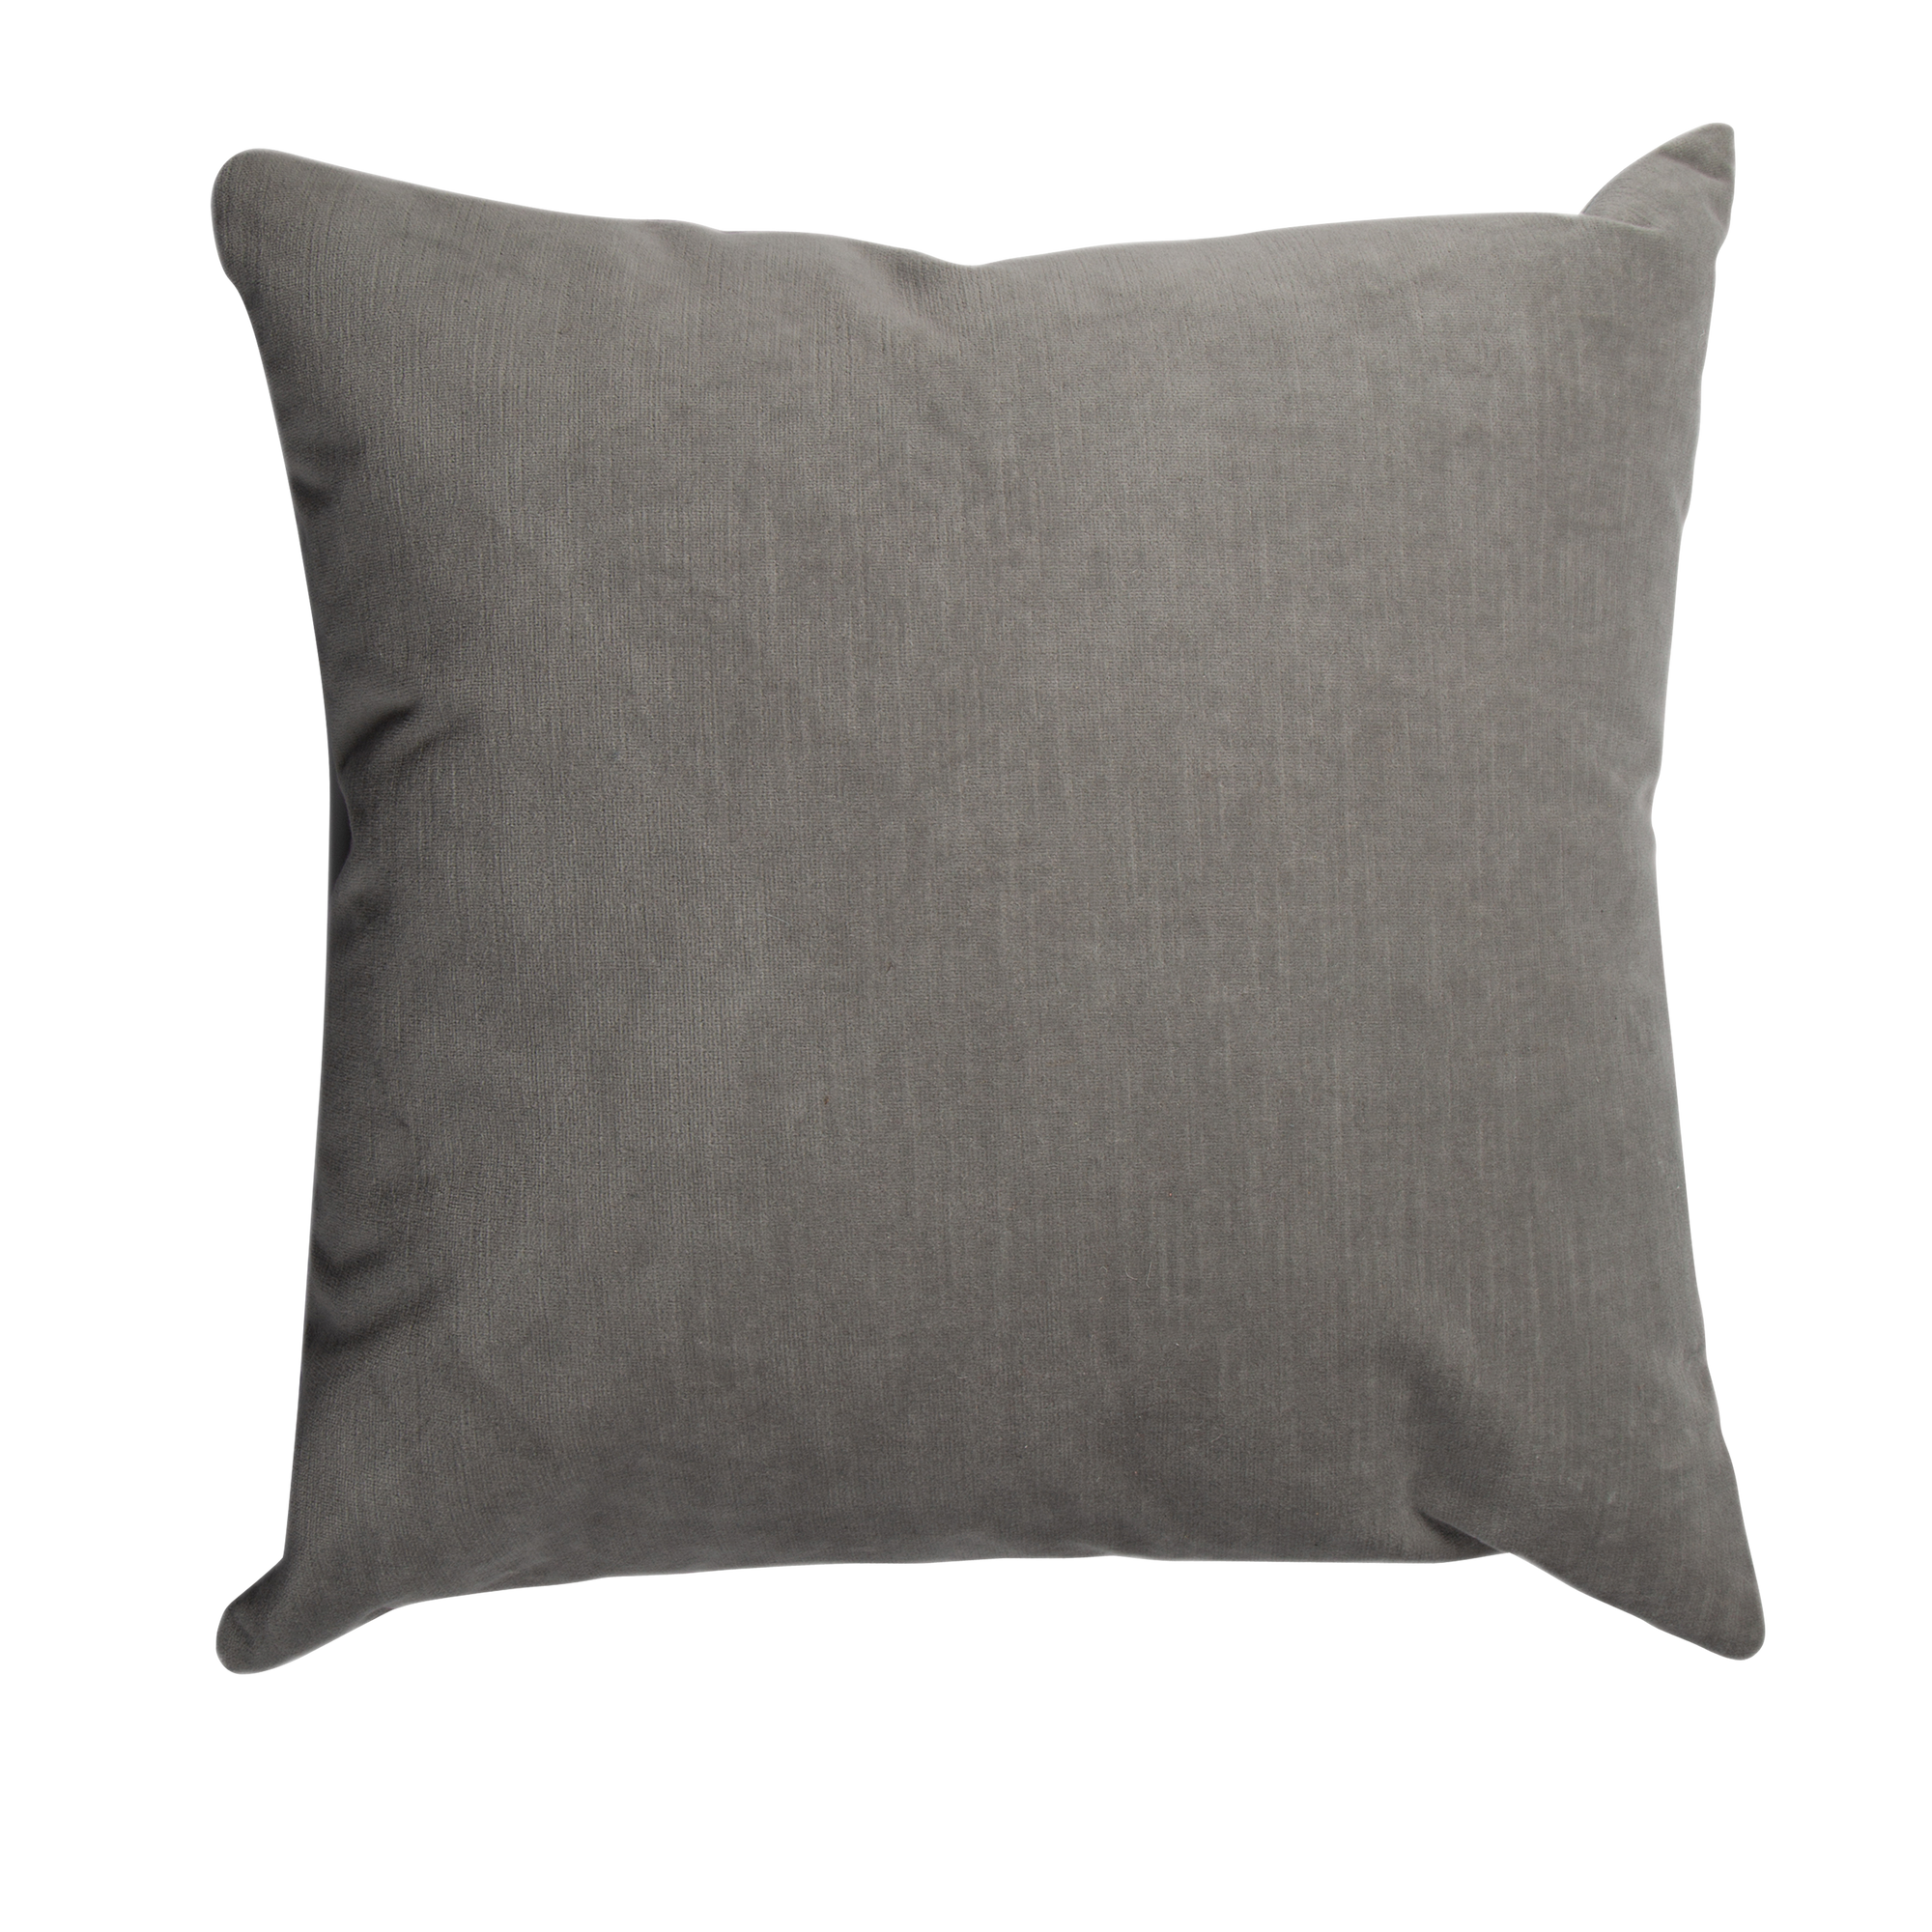 An elegant velvet pillow with gentle striation that creates subtle dimension.